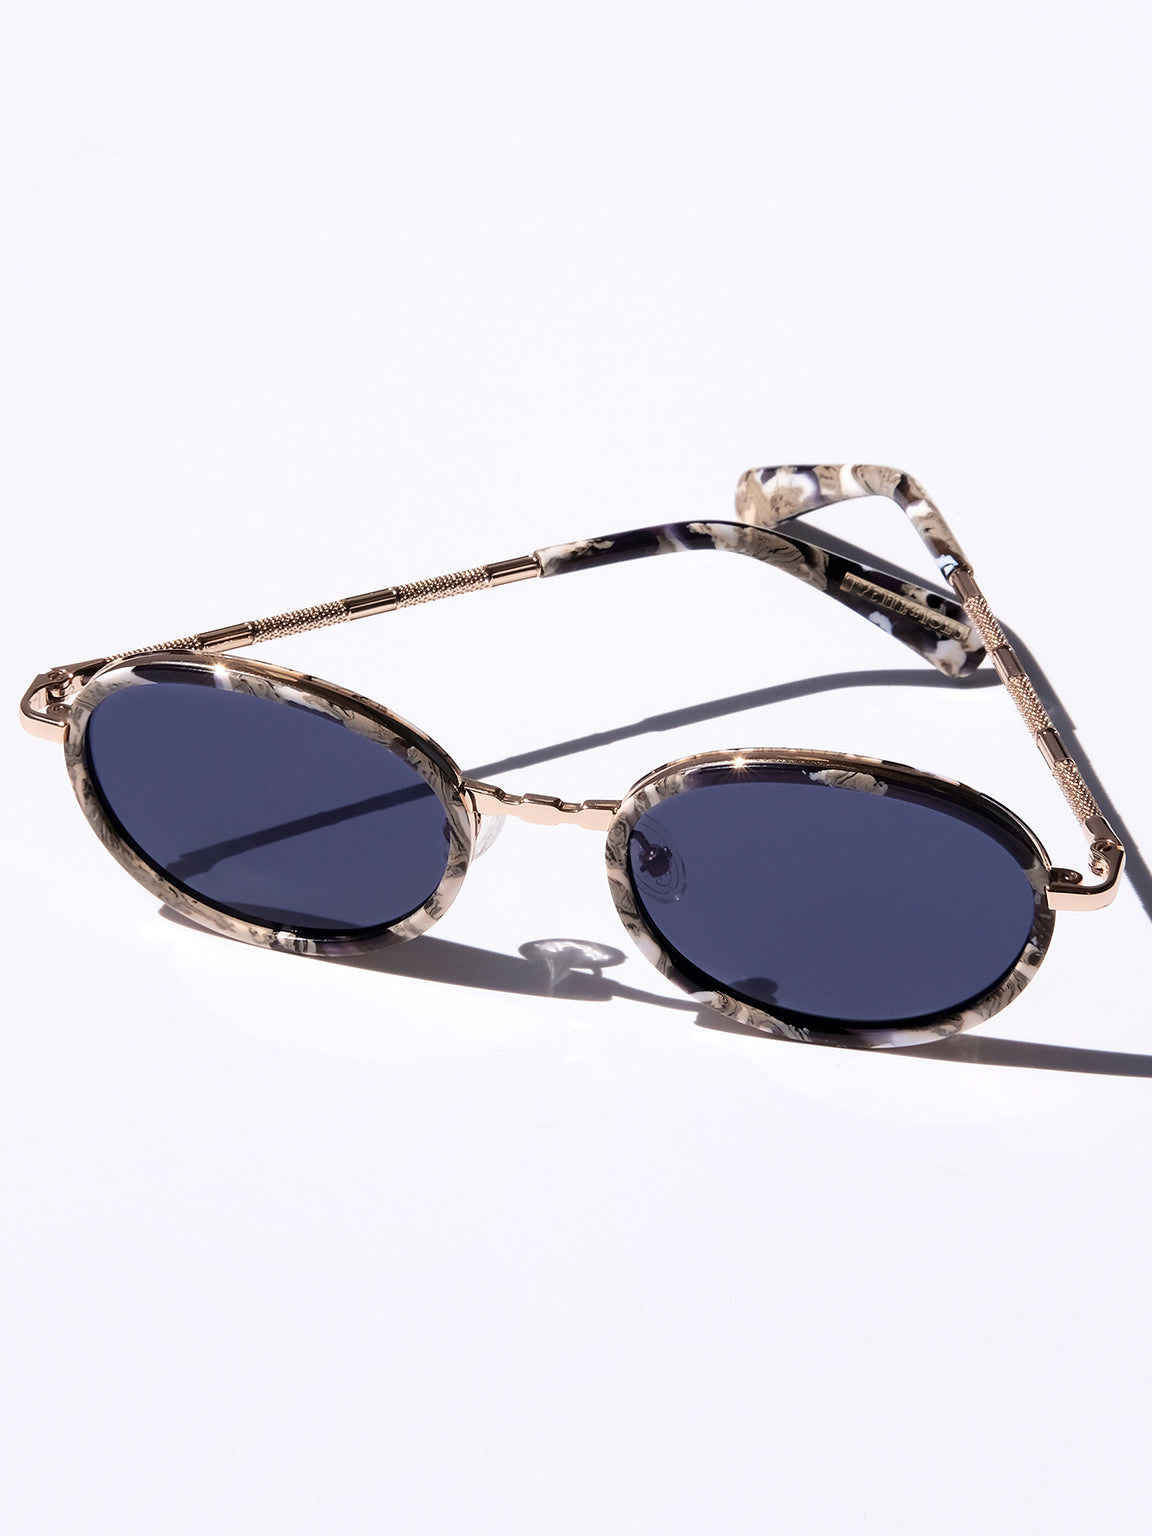 Classic Oval Metal Sunglasses. Gold Glasses. Round Sunglasses 